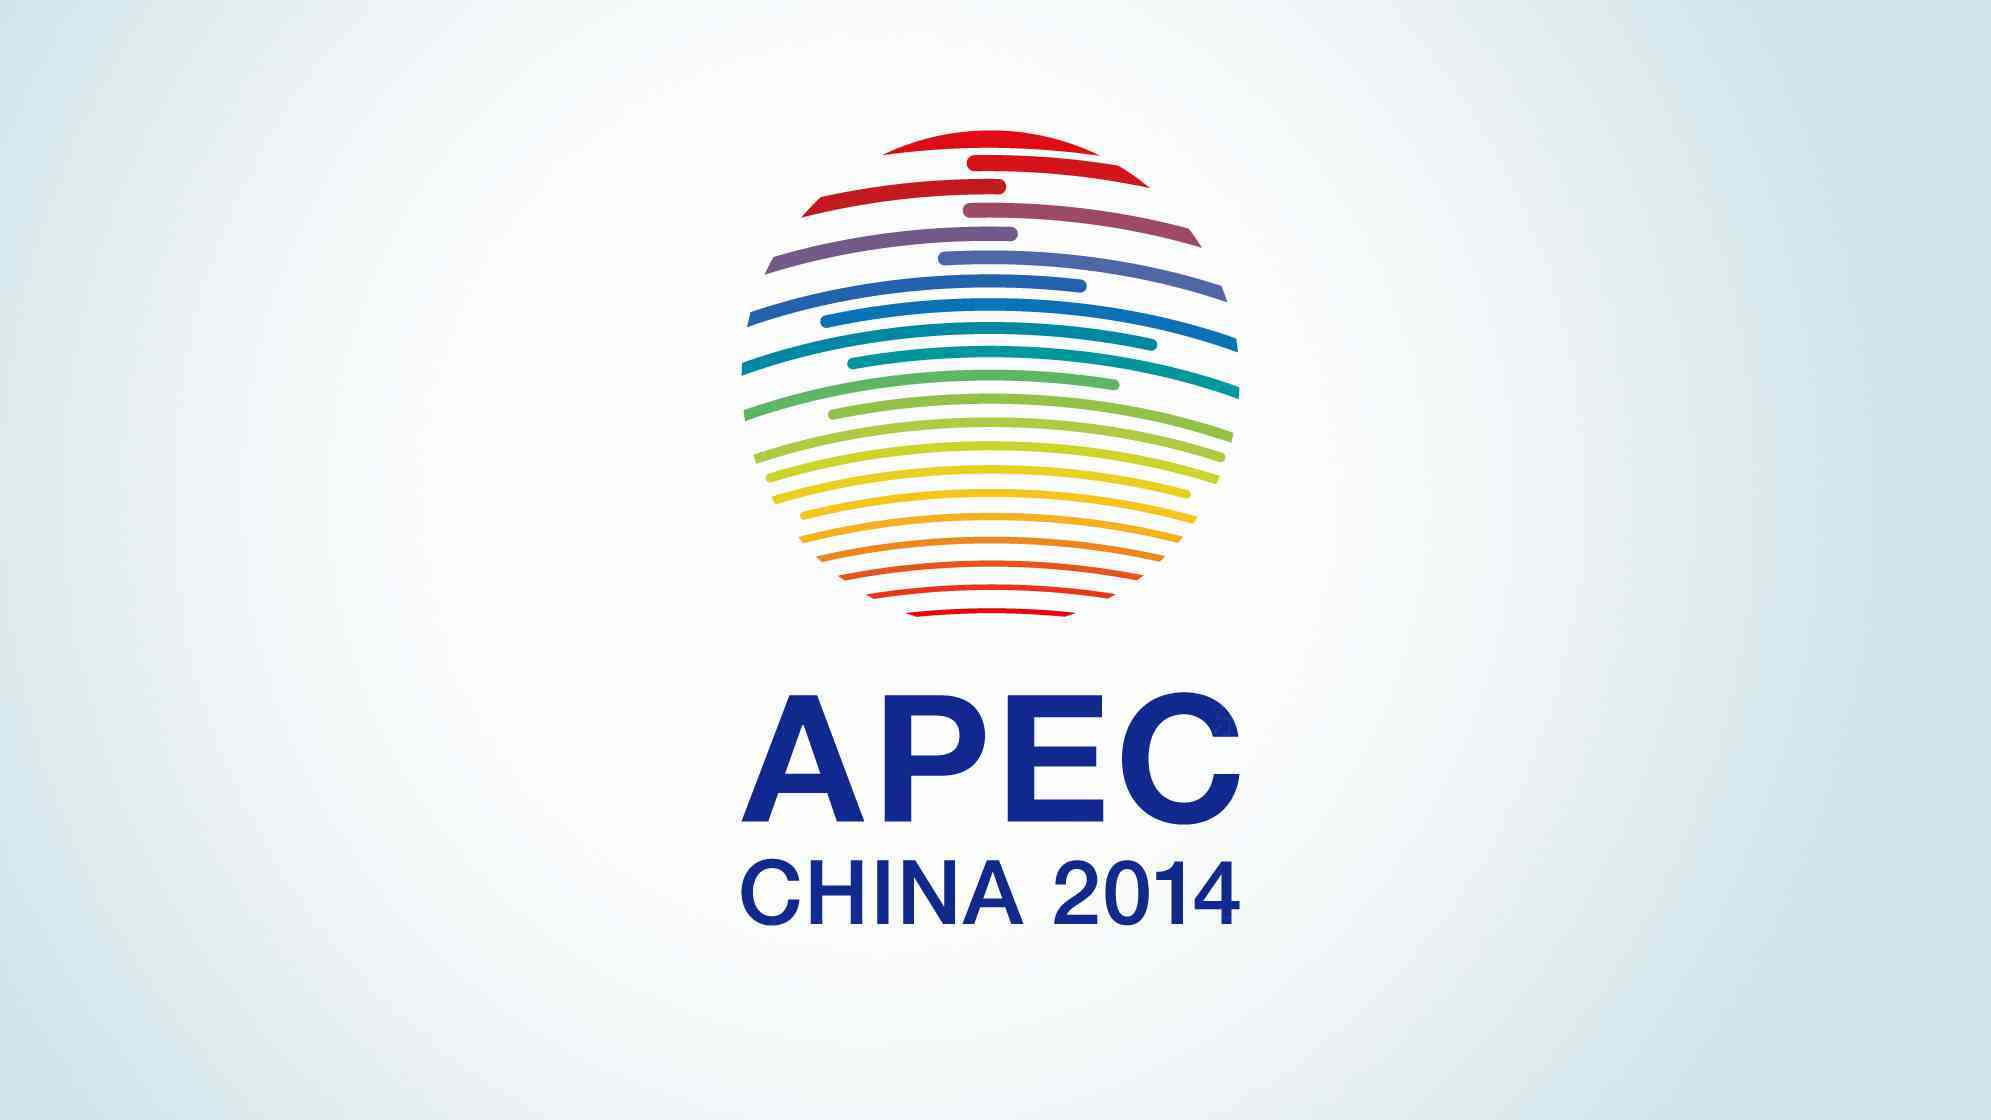 APEC China 2014会议vi设计图片素材